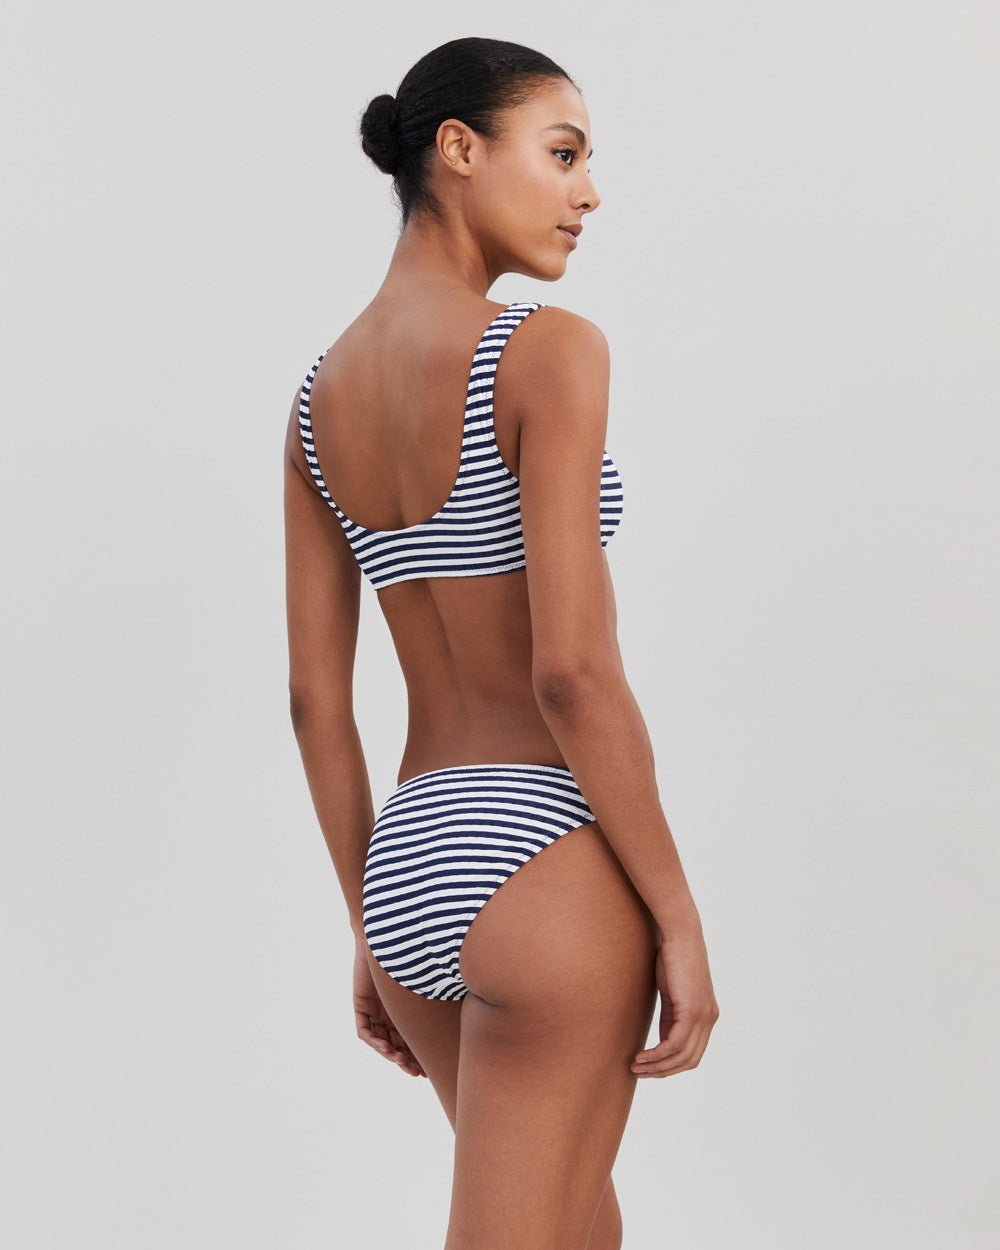 Bikinis - Bikini Tops, Bikini Bottoms, Bikini Sets | Solid & Striped